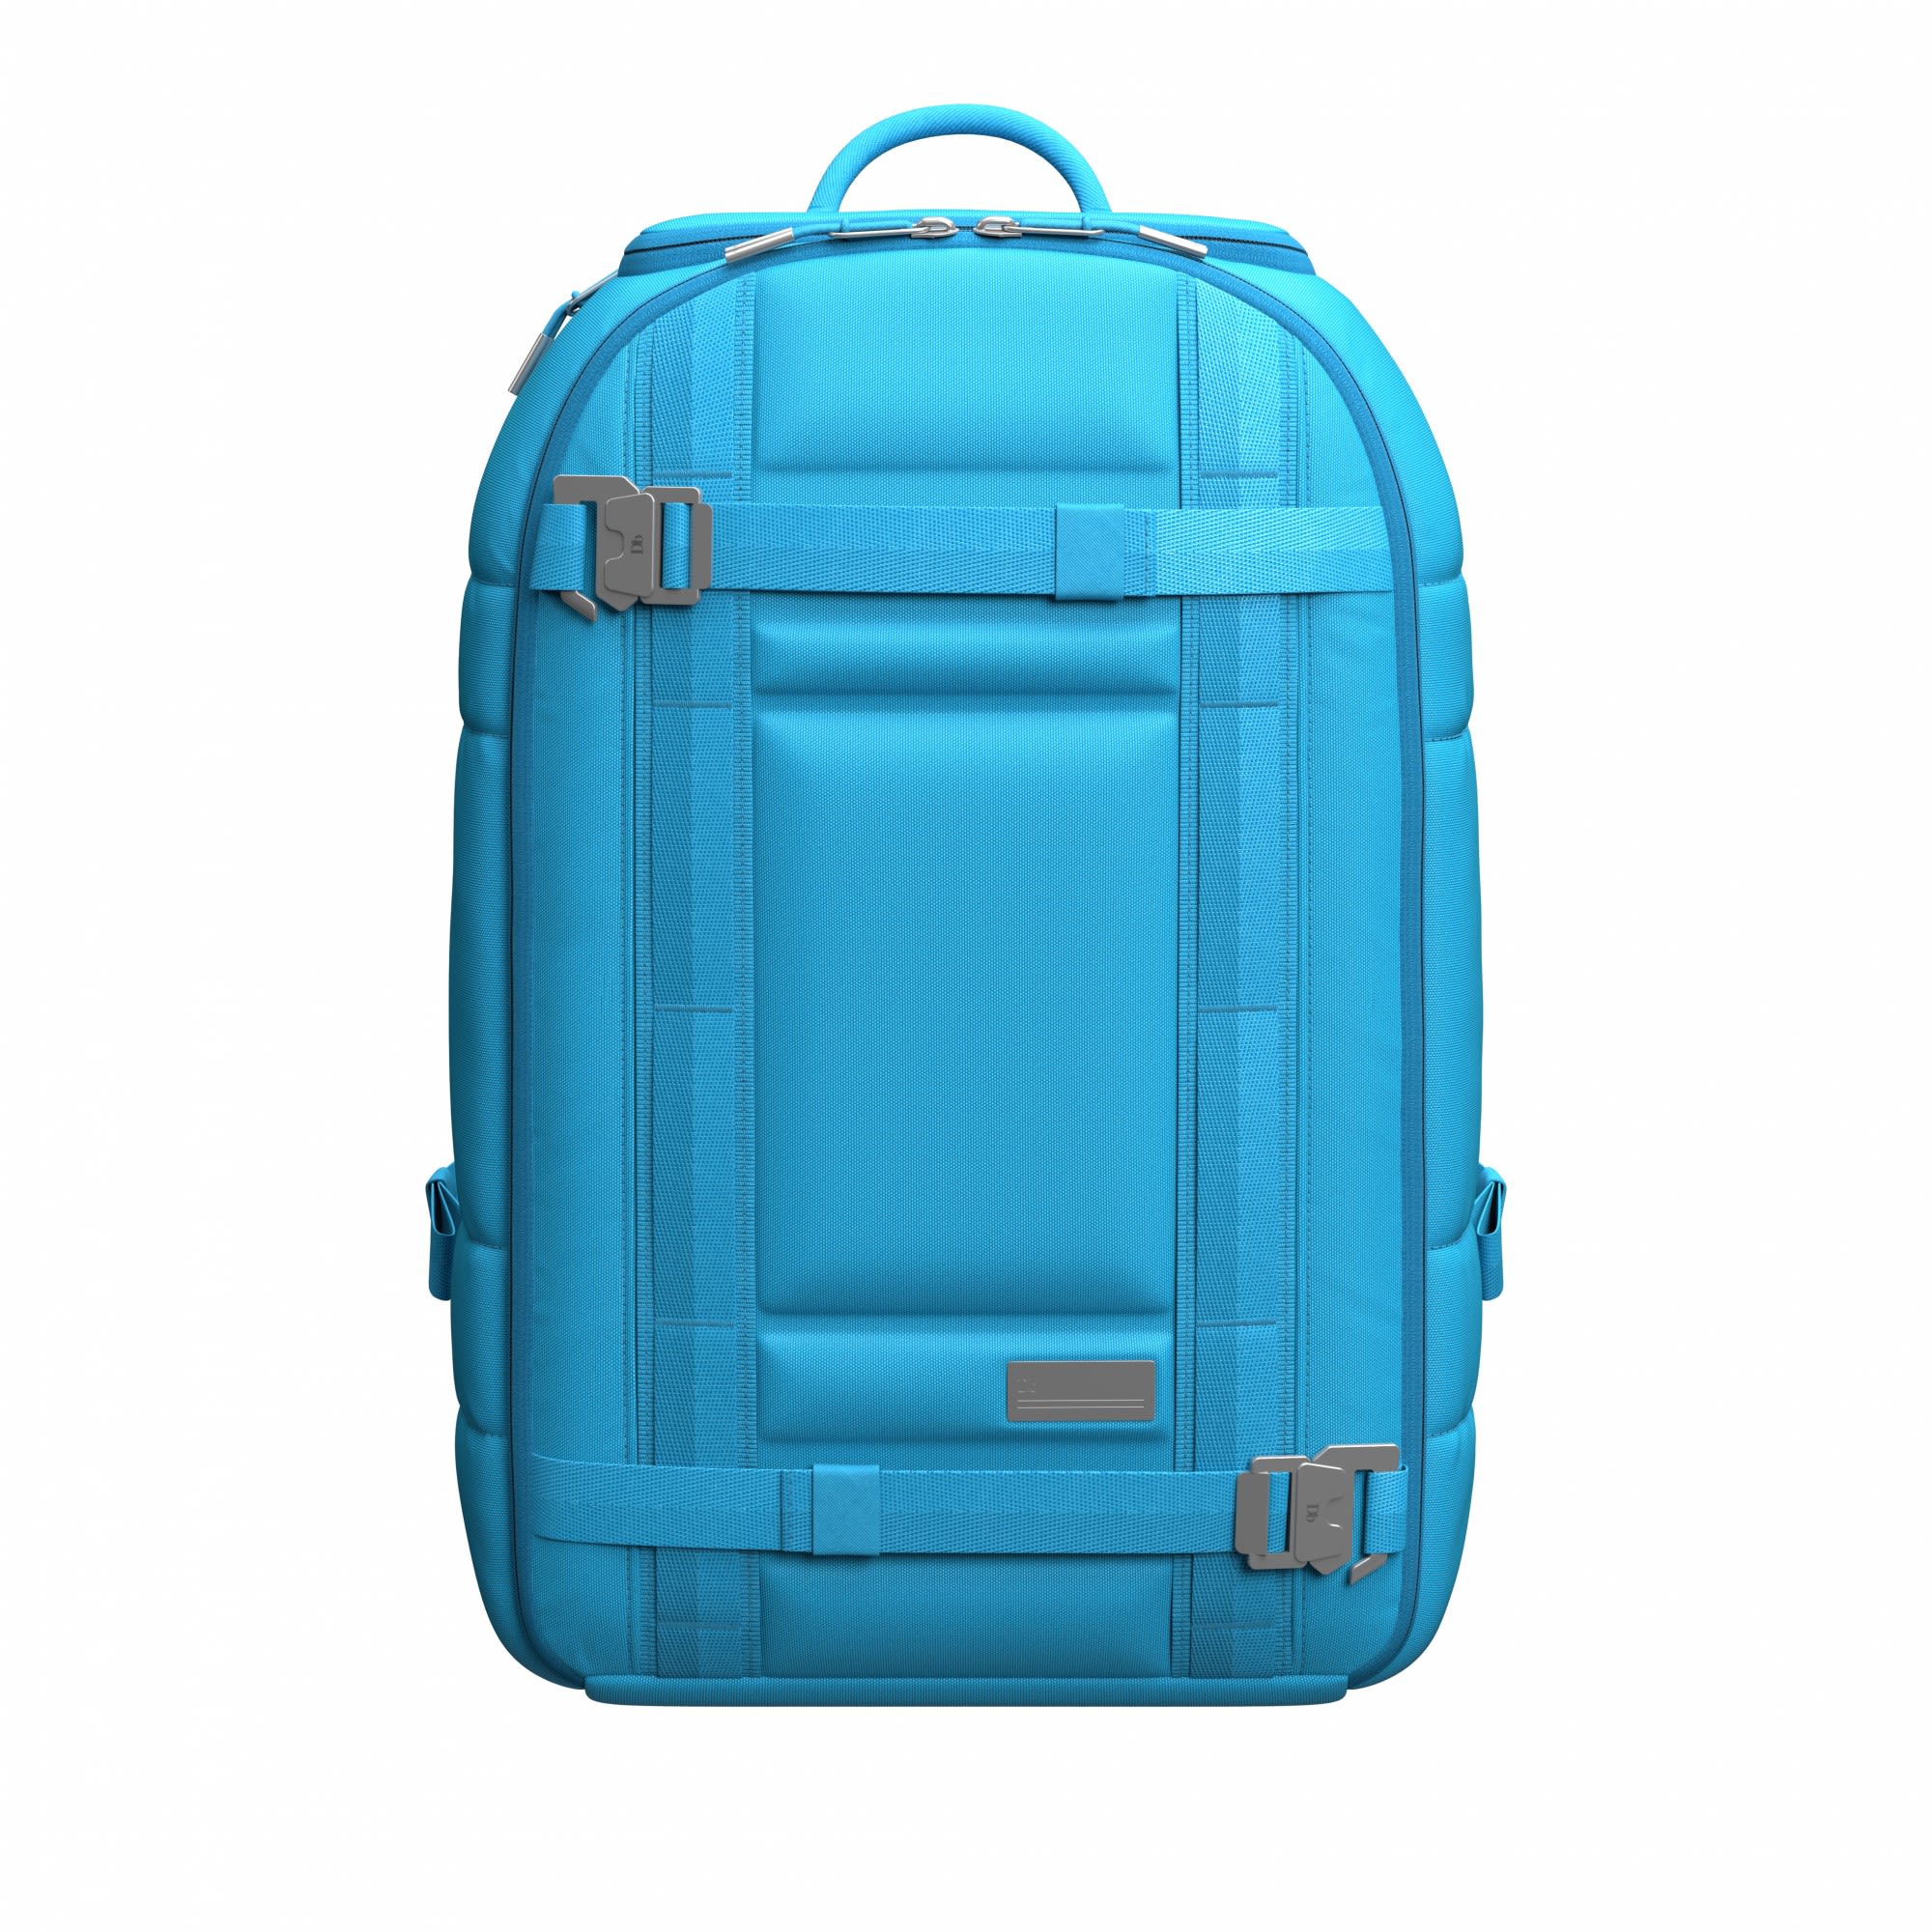 Db THE Ramverk 21L Backpack Blau- Daypacks- Grsse 21l - Farbe Ice Blue